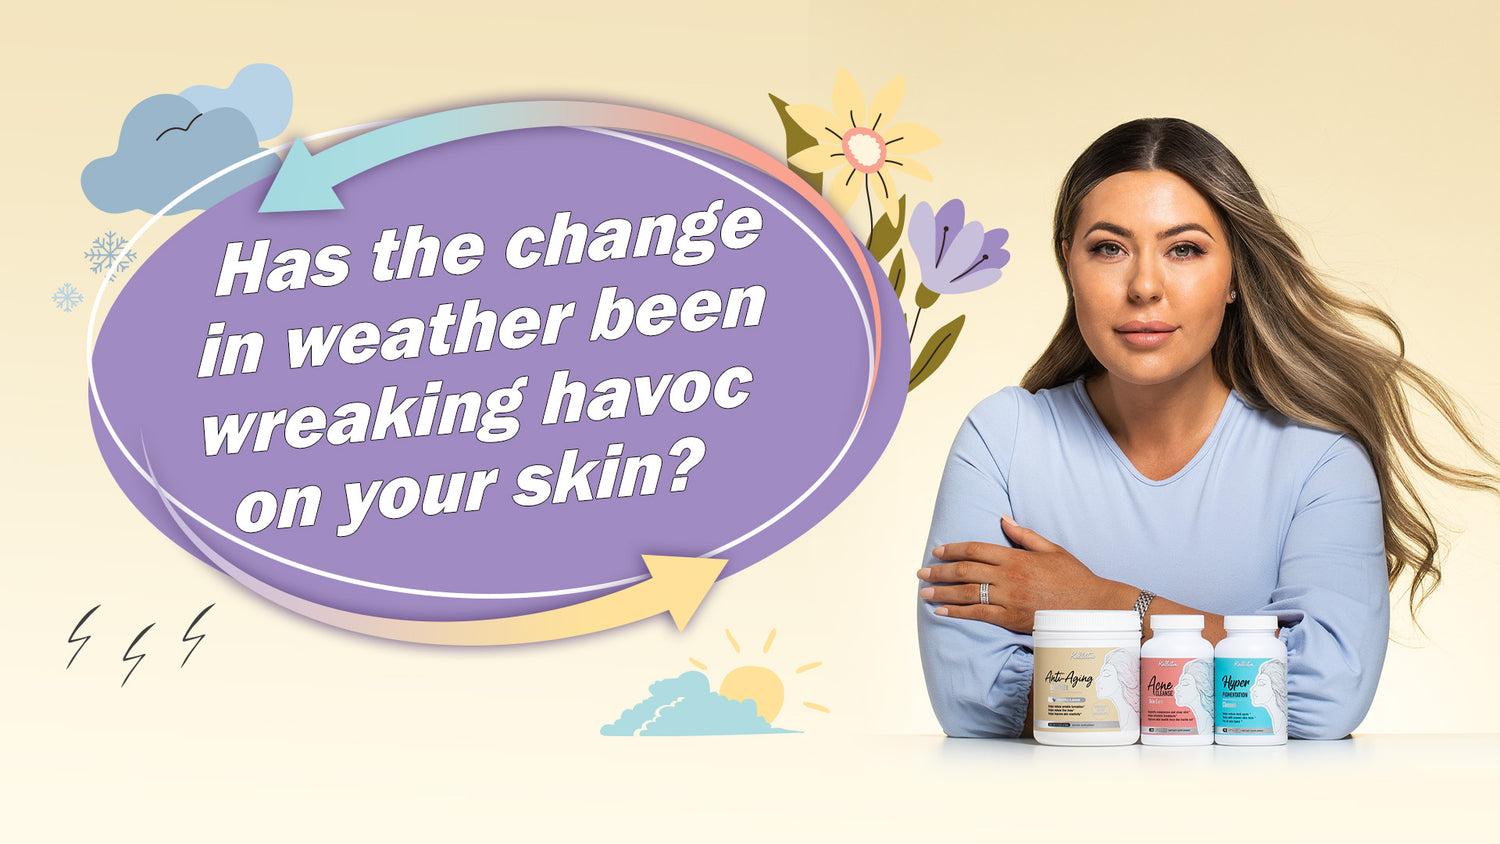 Has the change in weather been wreaking havoc on your skin?